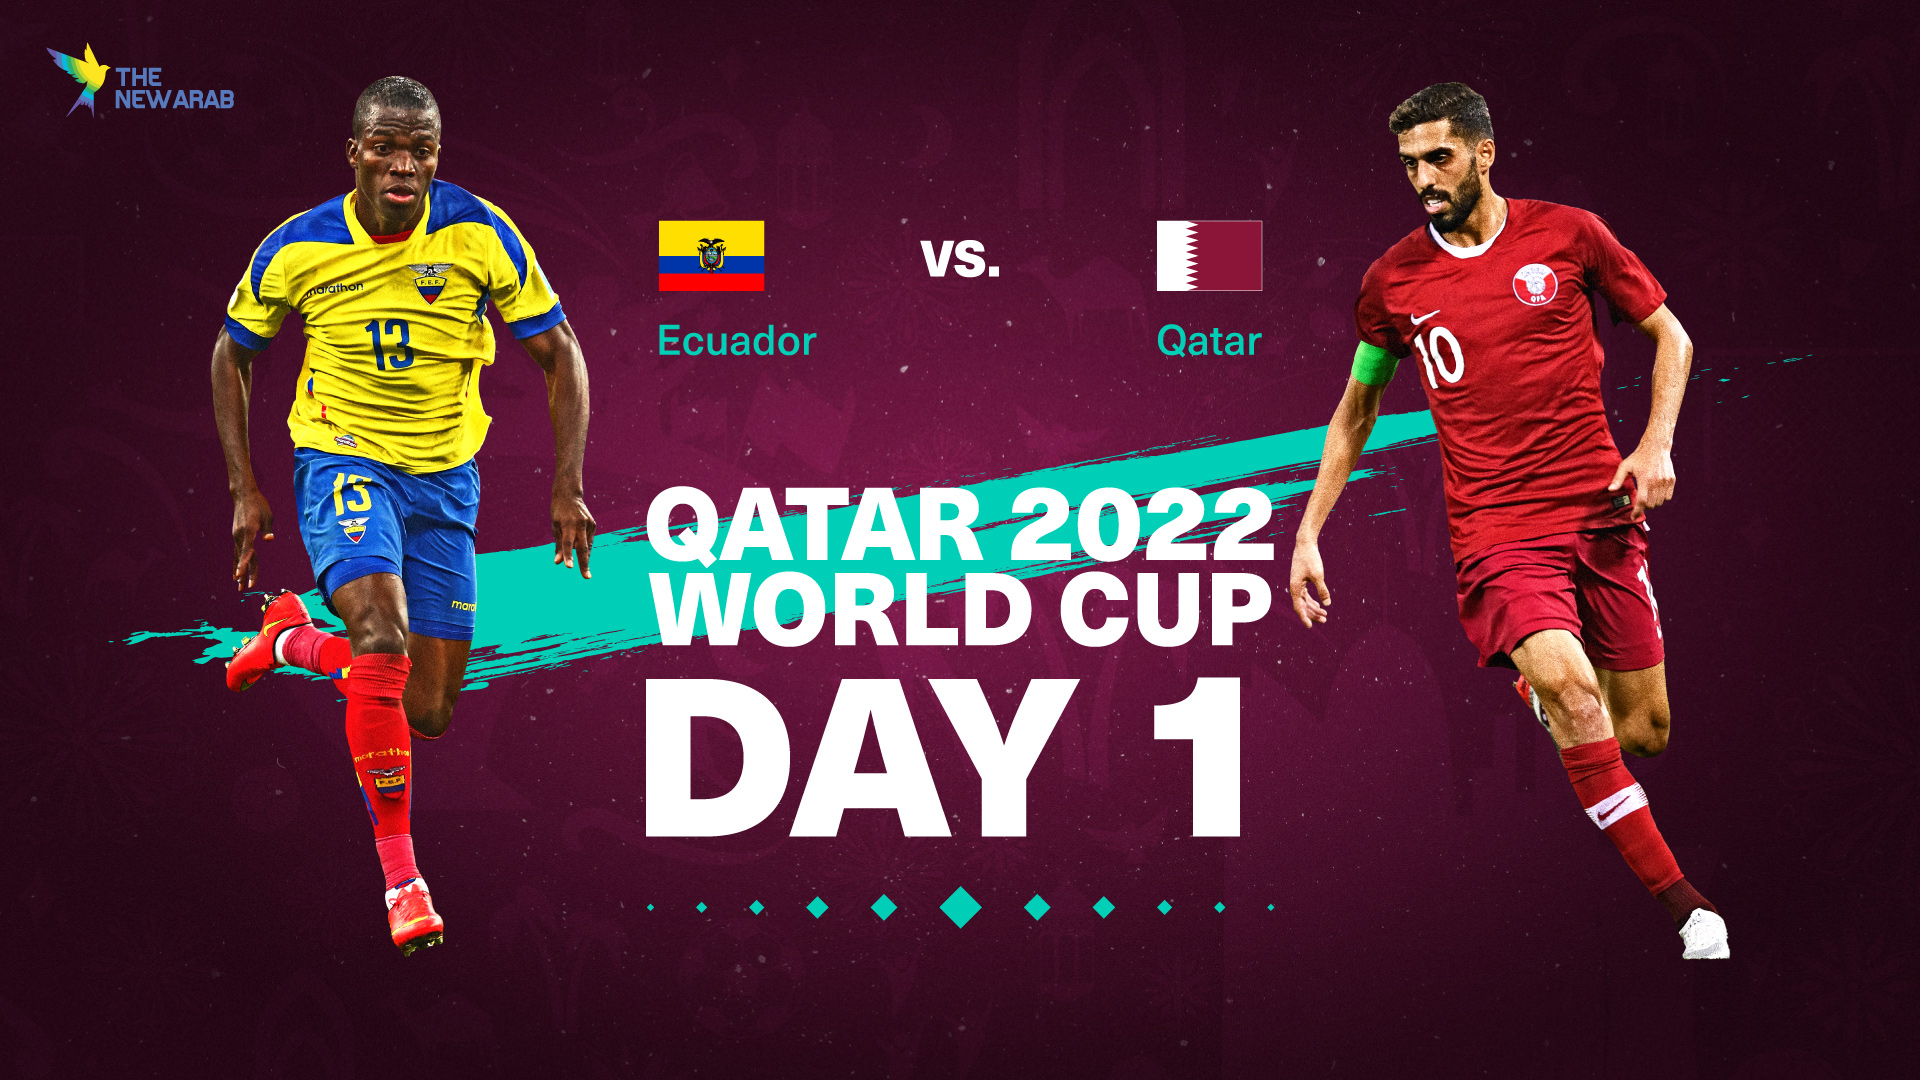 Qatar World Cup 2022 Day 1 Tournament kicks off